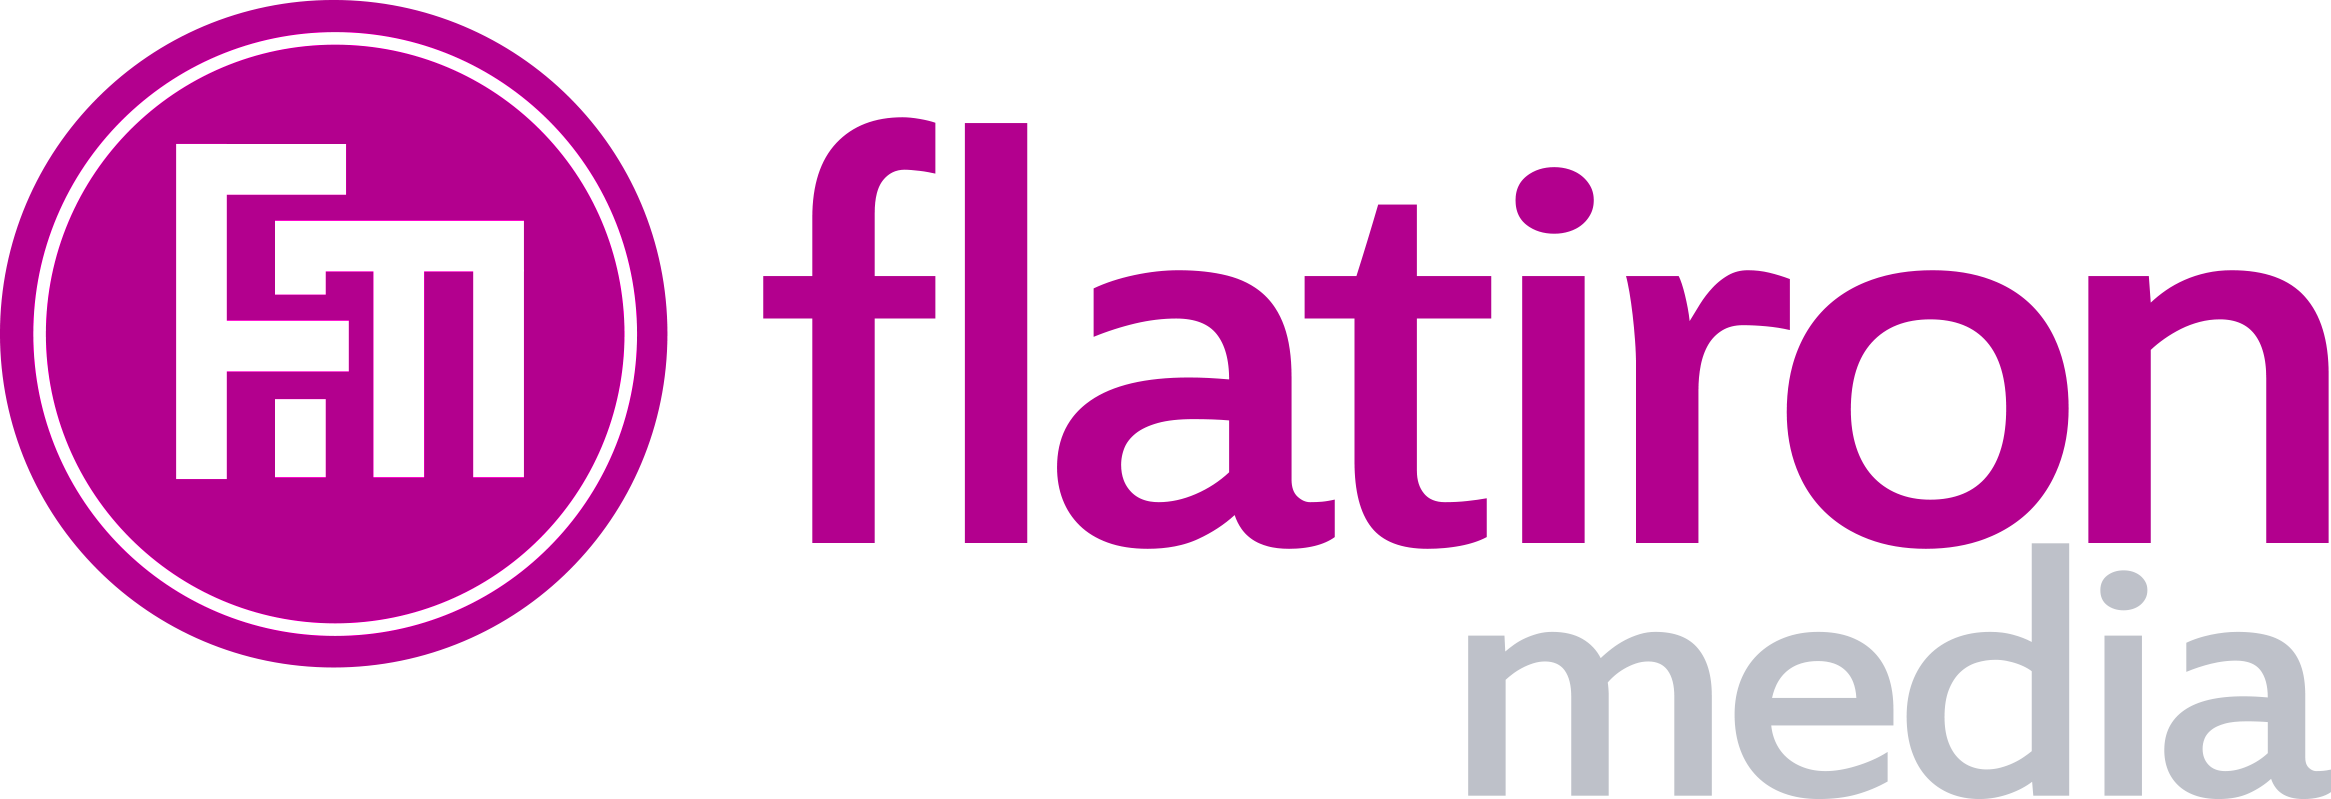 Flatiron